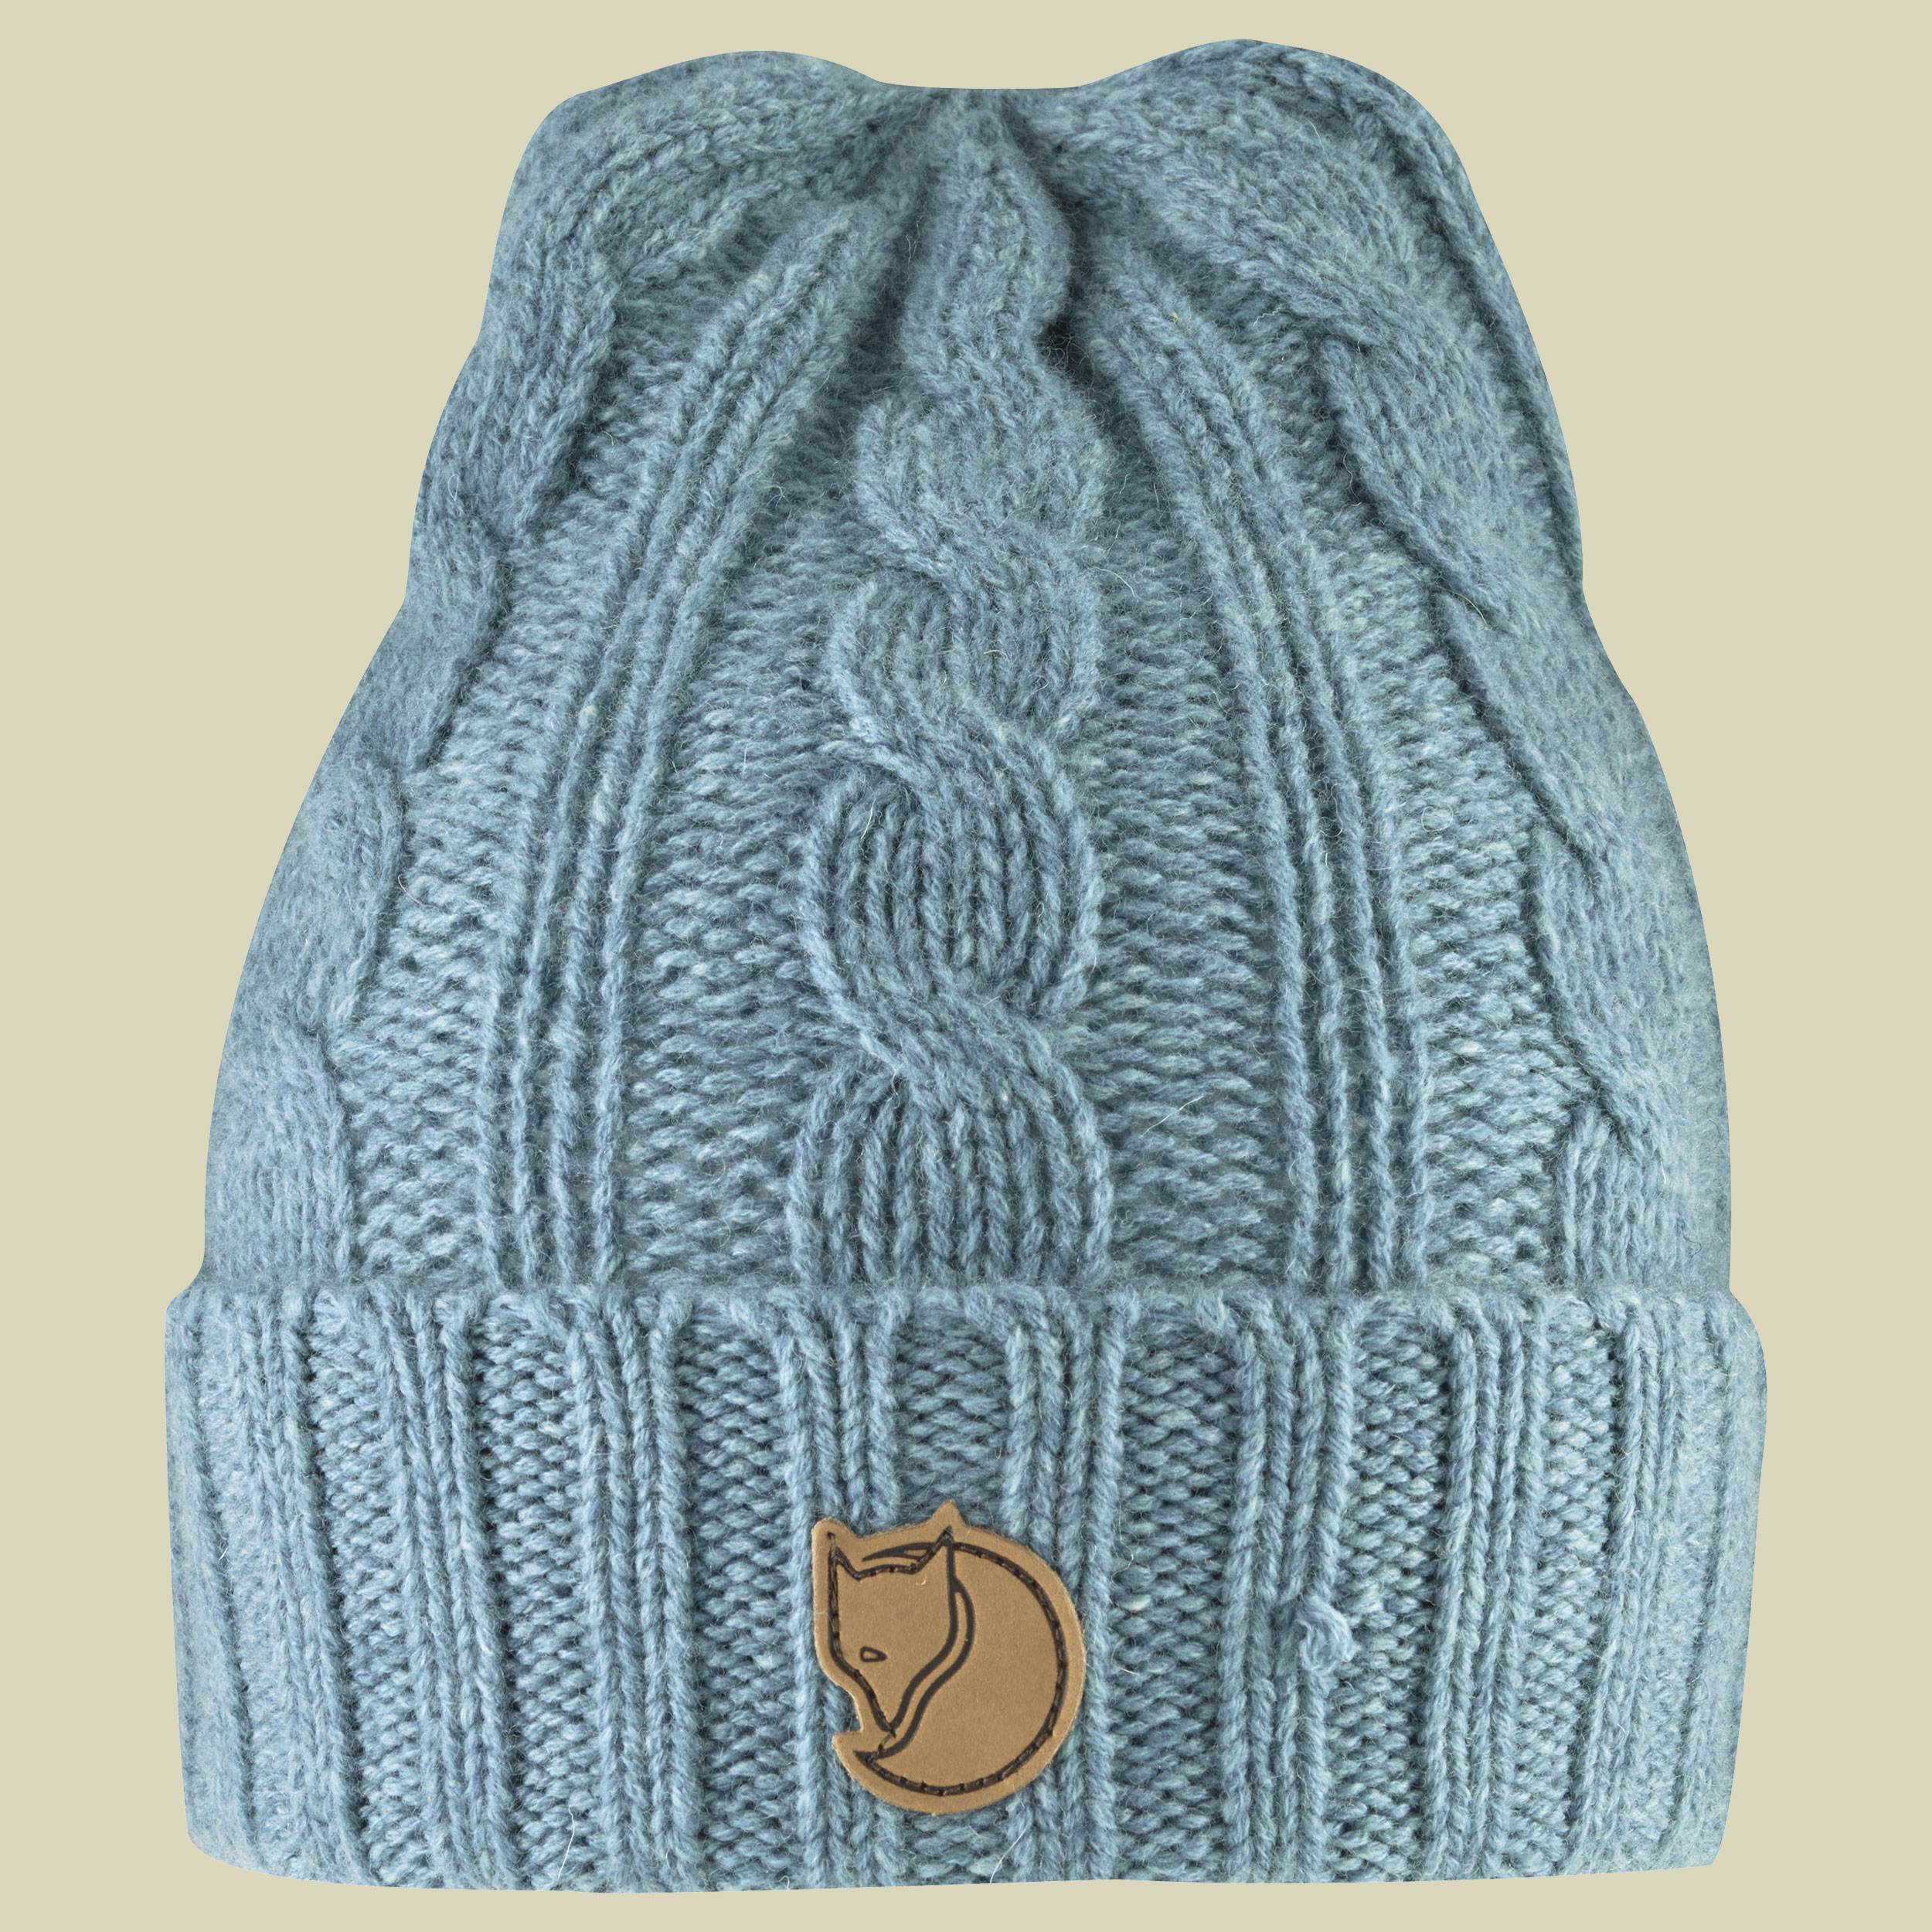 Braided Knit Hat Größe one size Farbe frost green